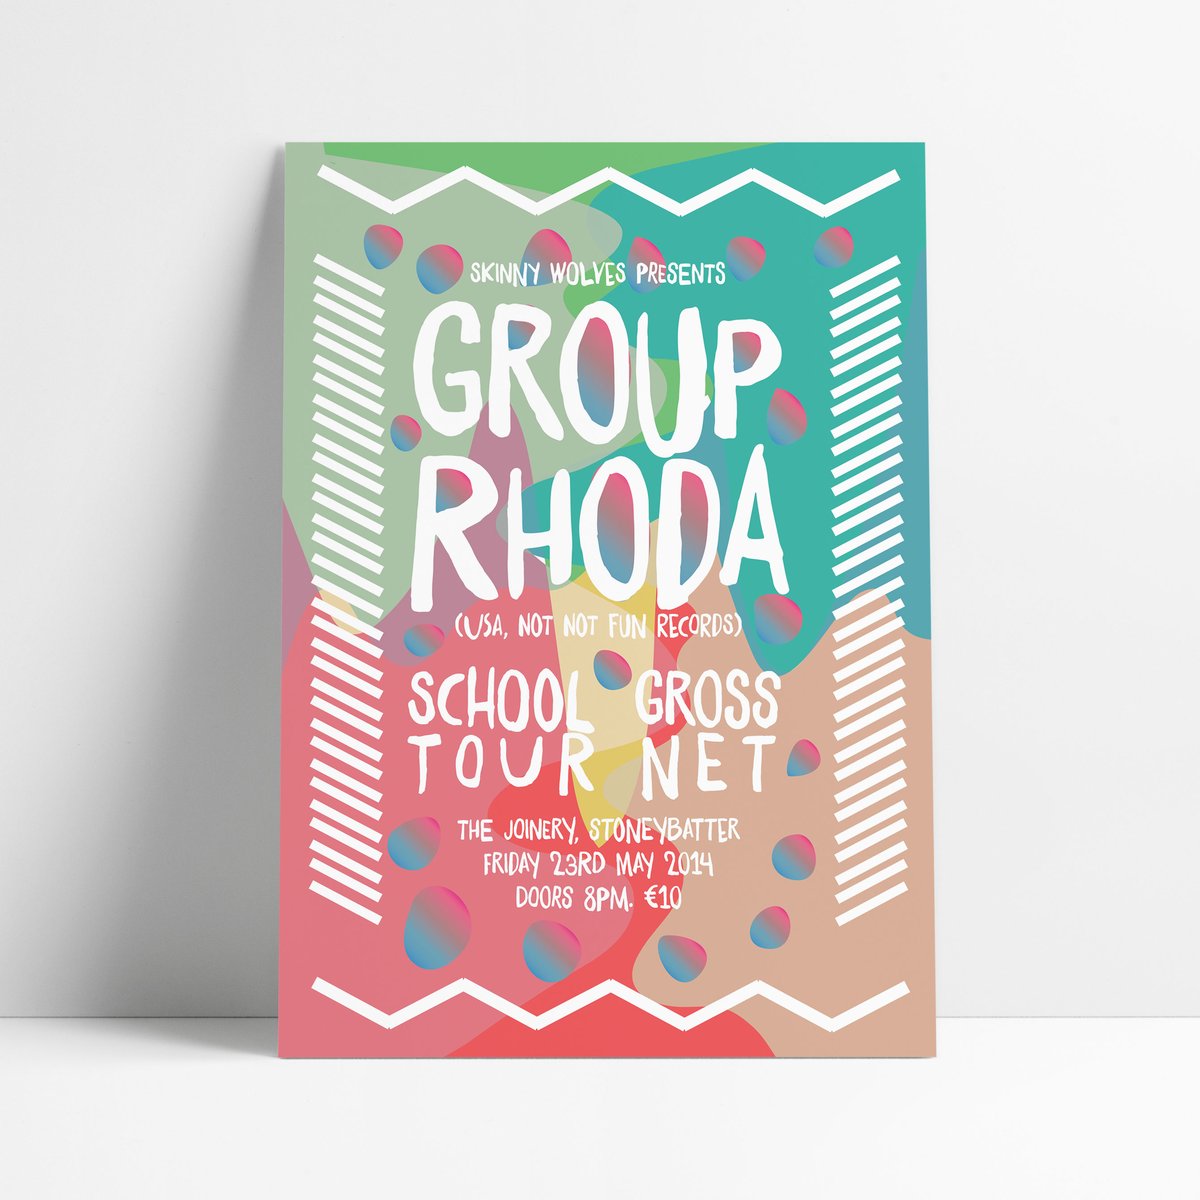 Image of GROUP RHODA / School Tour / Gross Net - Live in The Joinery, Dublin